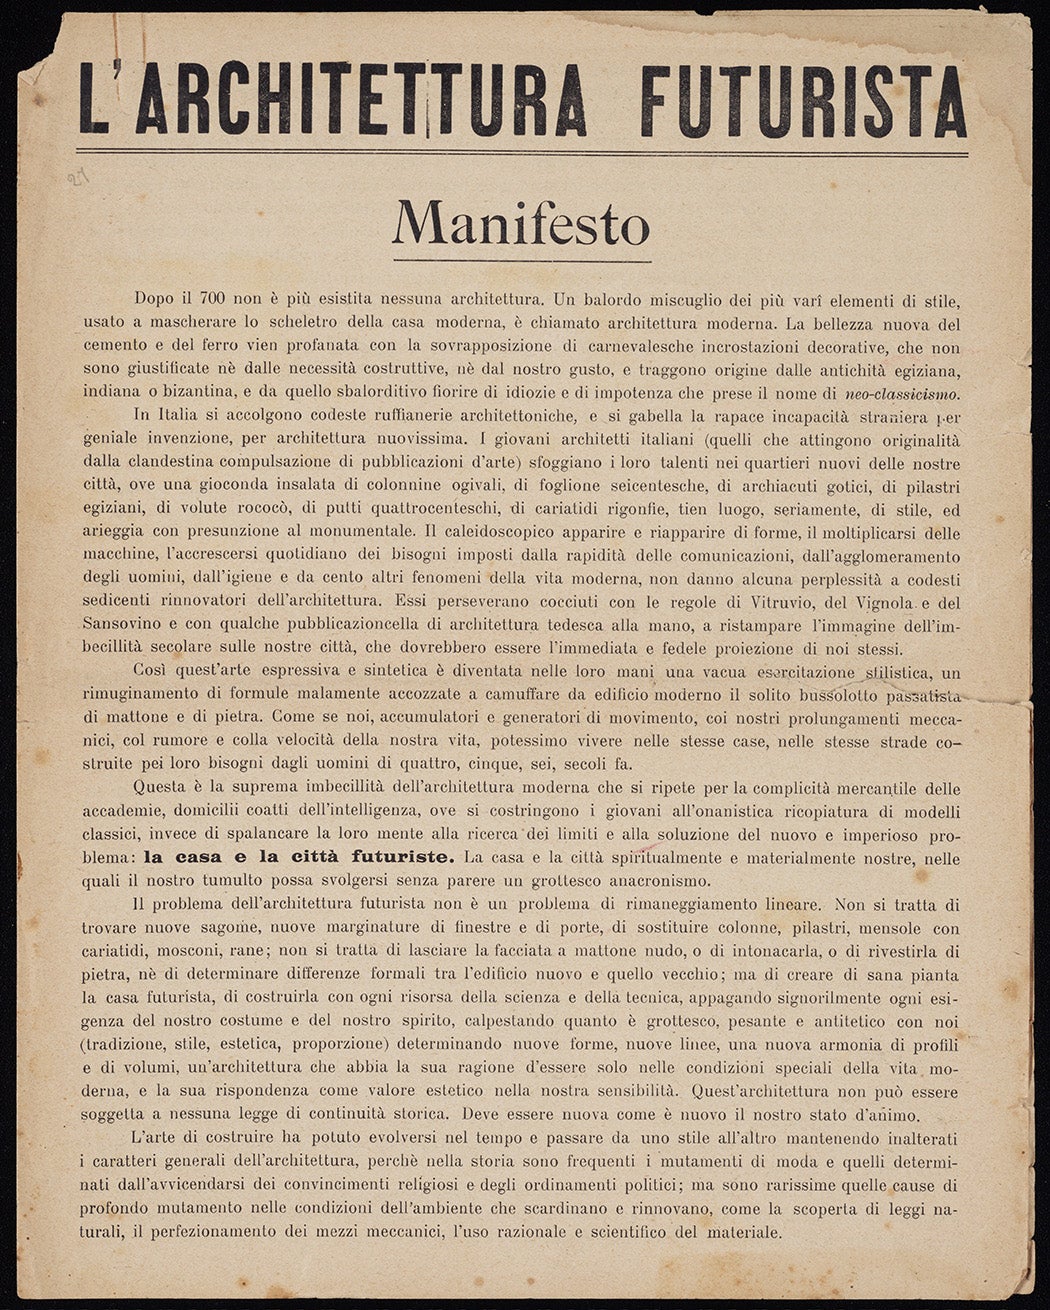 The Futurist Architecture Manifesto by Antonio Sant'Elia